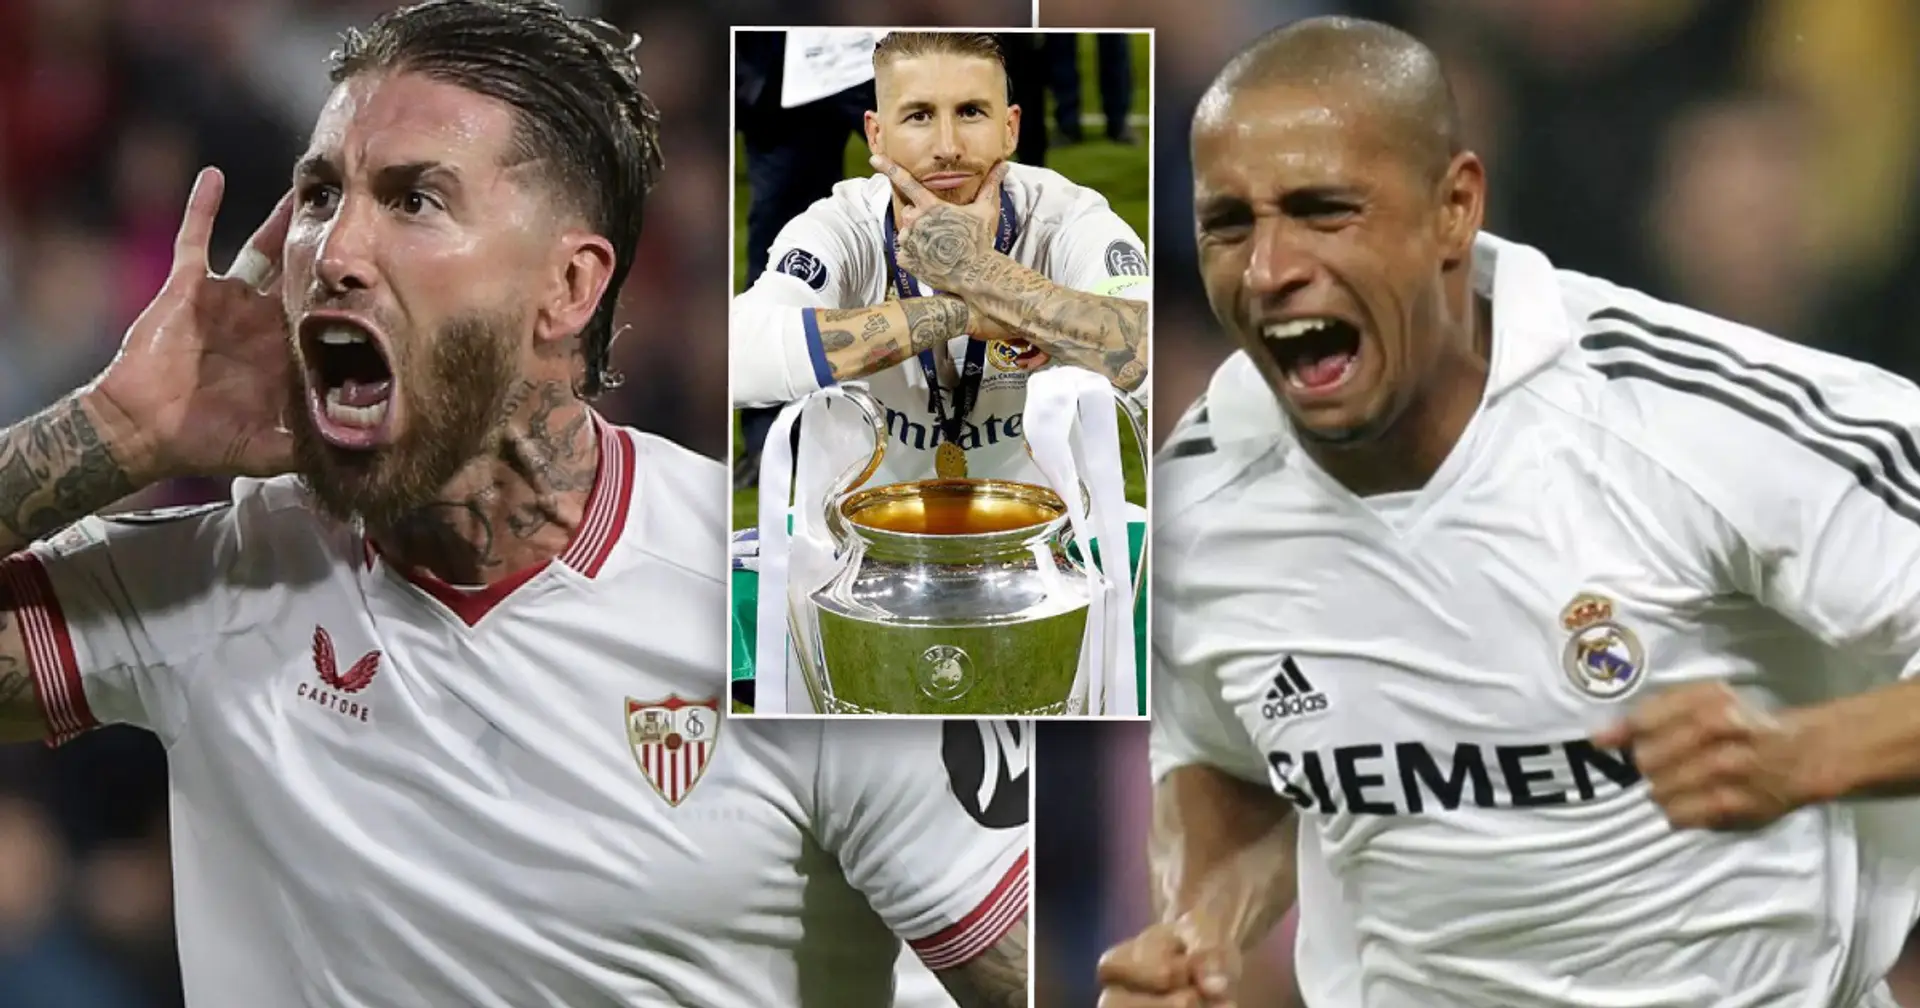 Ramos equals Roberto Carlos' Champions League record, but Sevilla is Sevilla